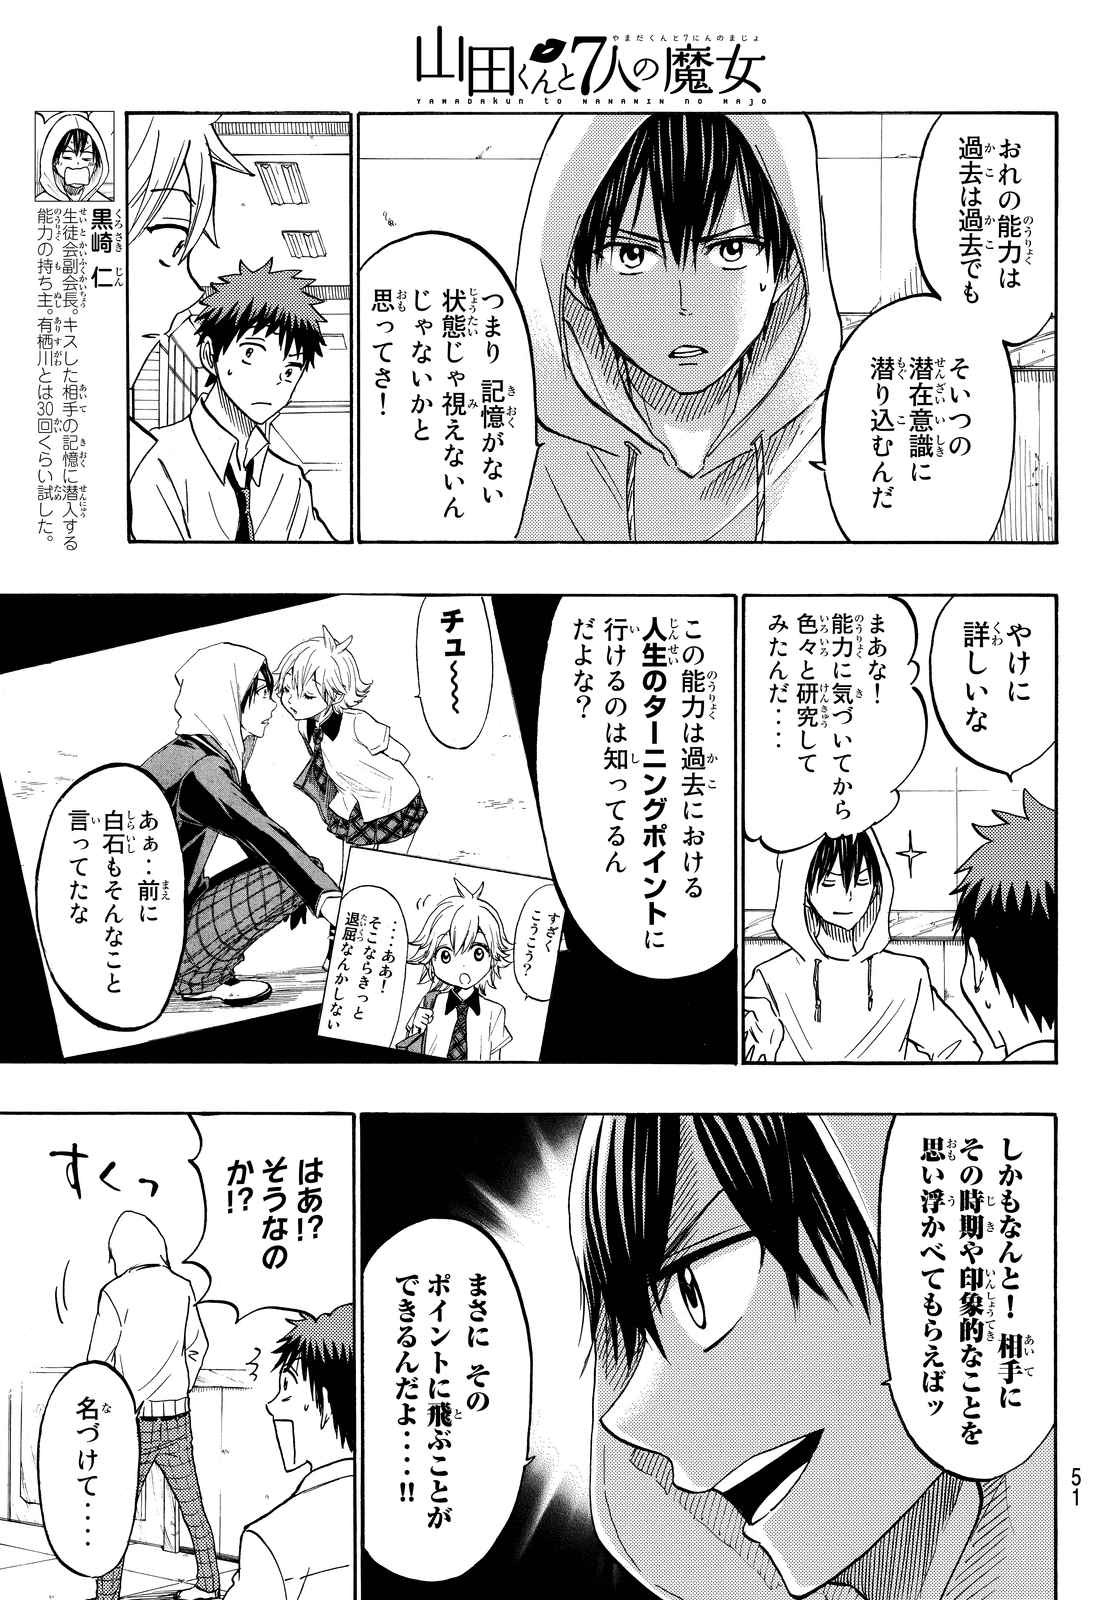 Yamada-kun to 7-nin no Majo - Chapter 211 - Page 5